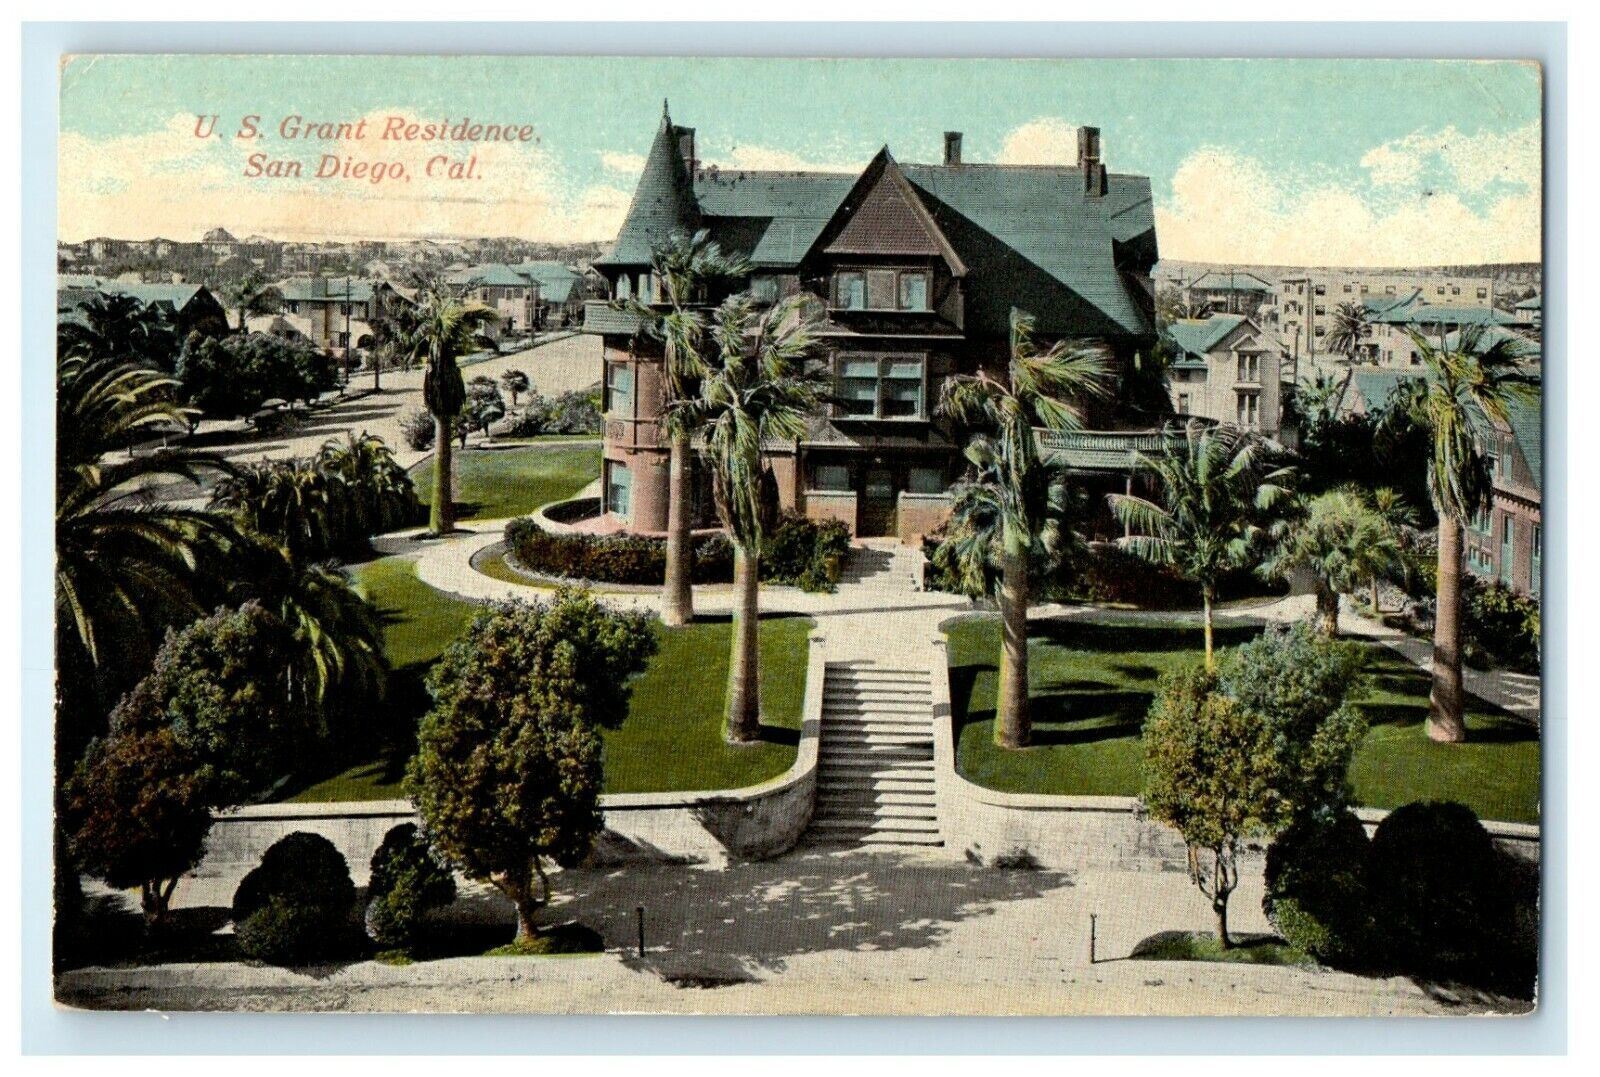 1912 View Of U.S Grant Residence San Diego California CA Antique Postcard